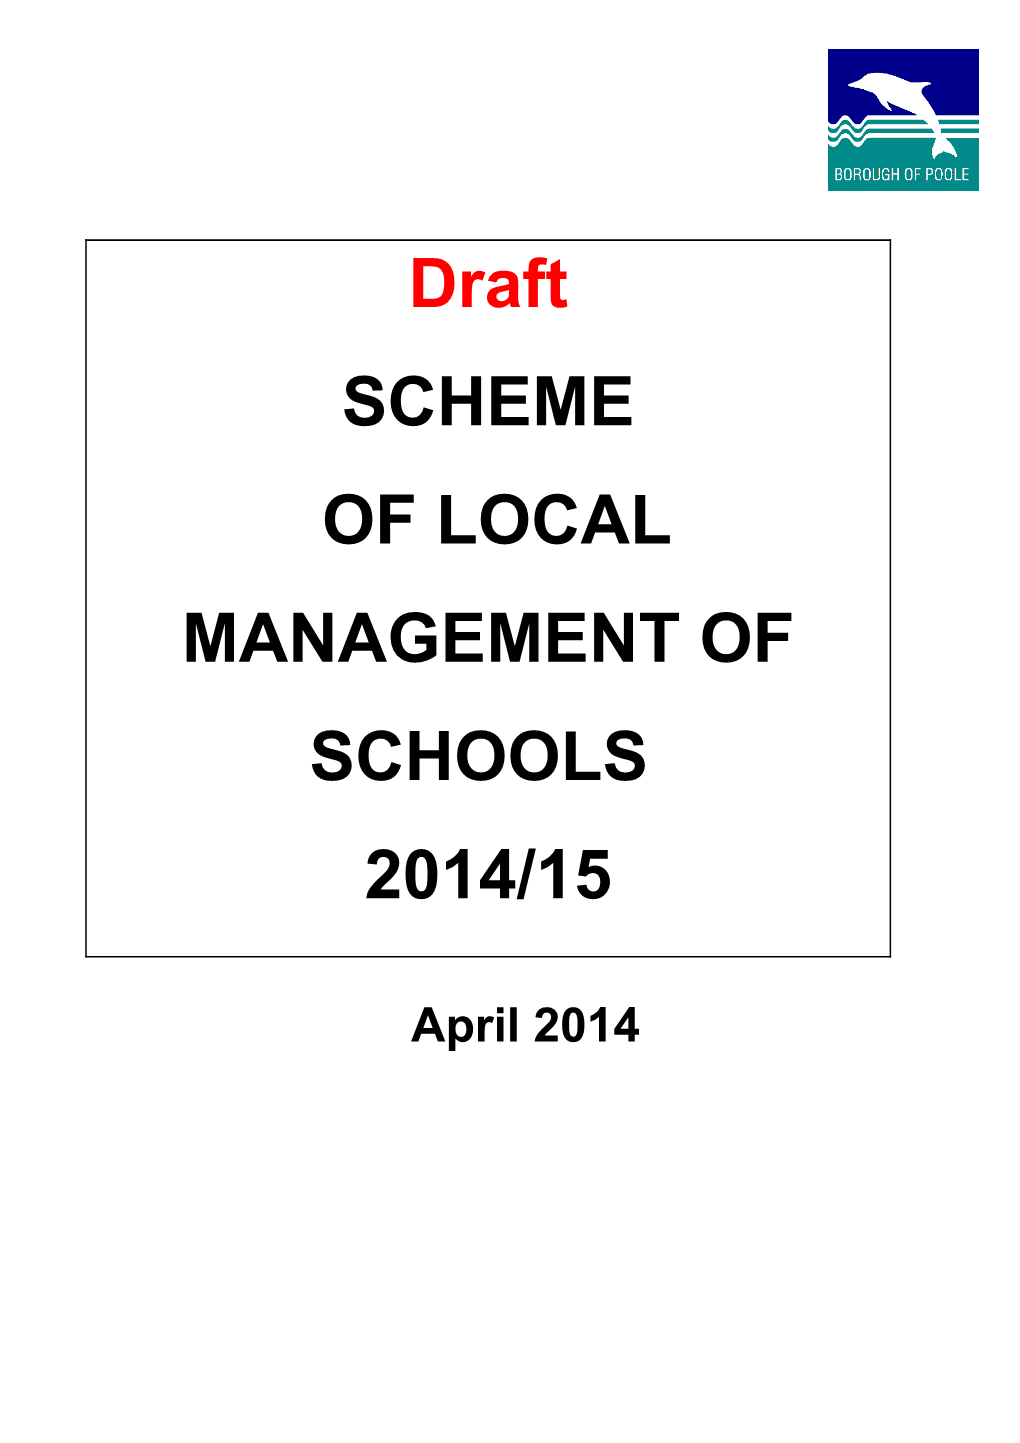 Draft Scheme of Local Management of Schools 1999/2000